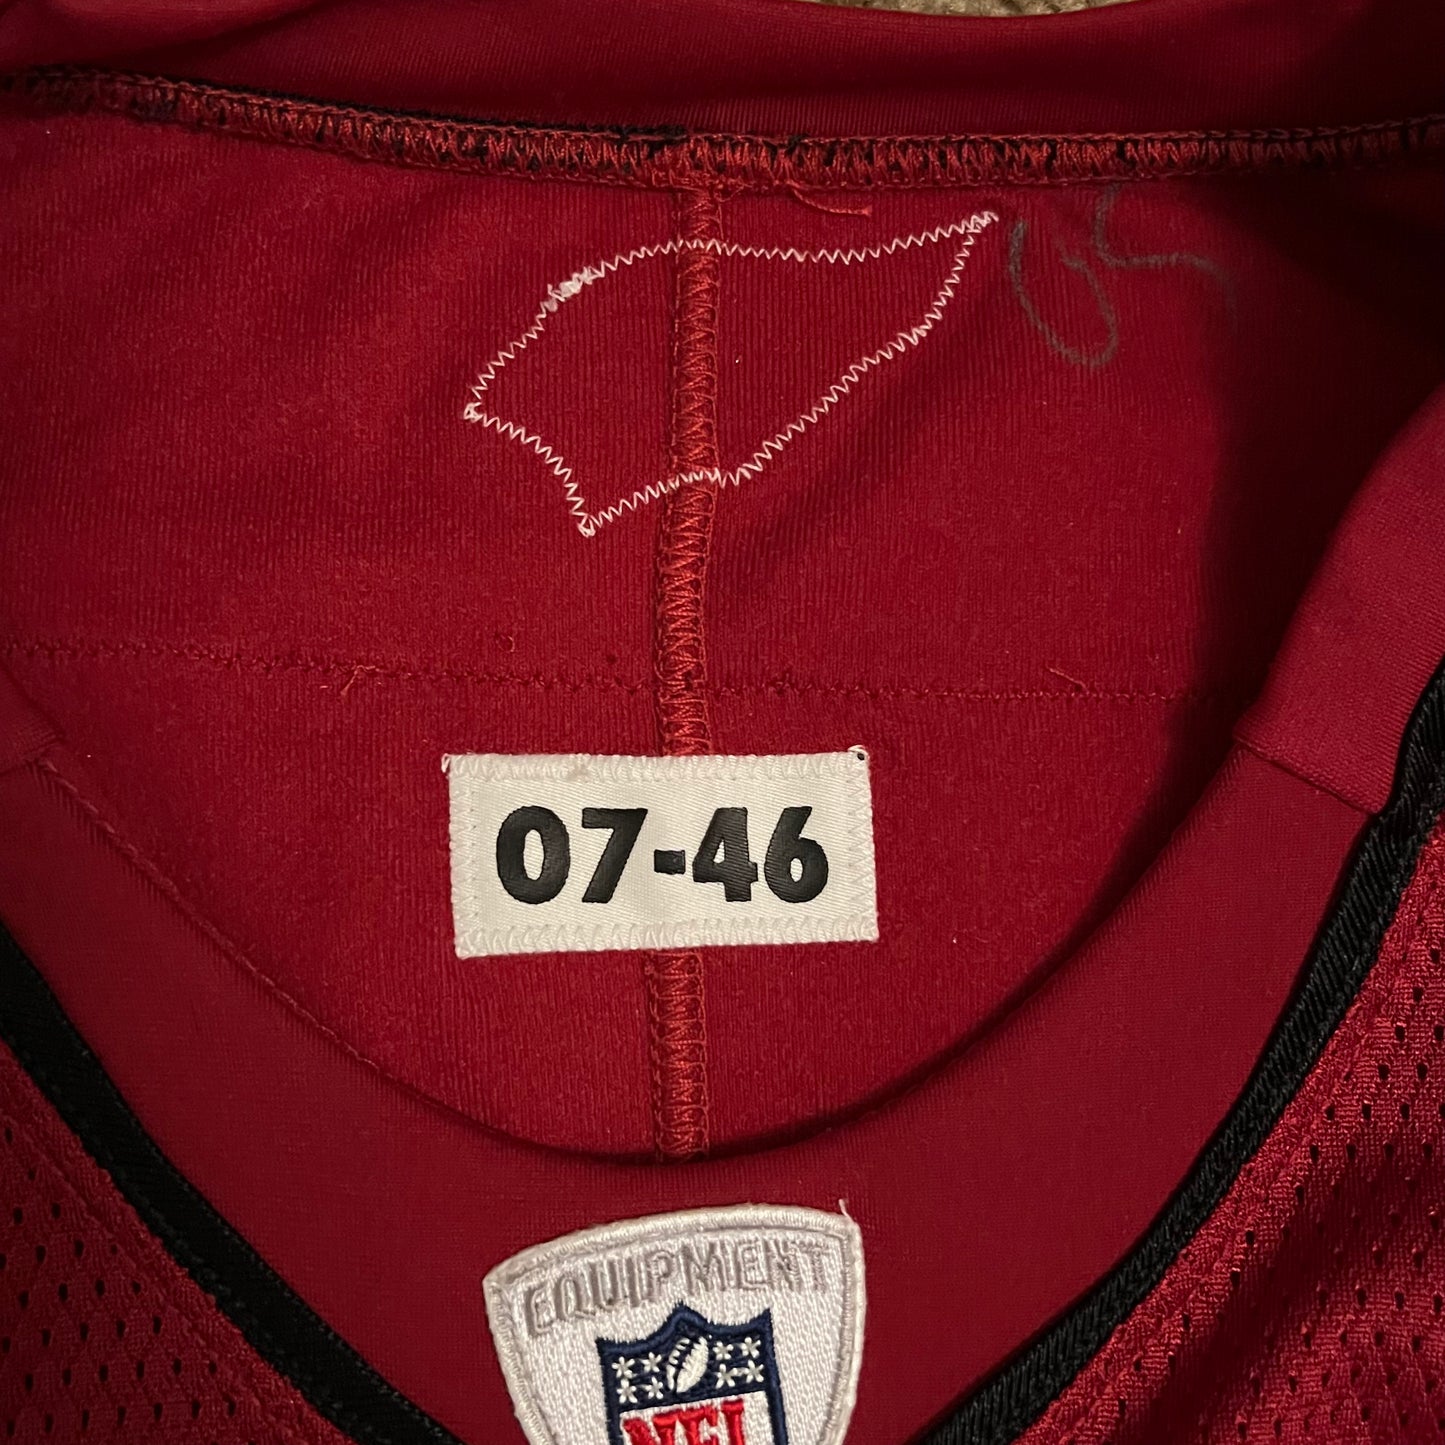 Arizona Cardinals Ryan Moats #30 Team Issued NFL Jersey